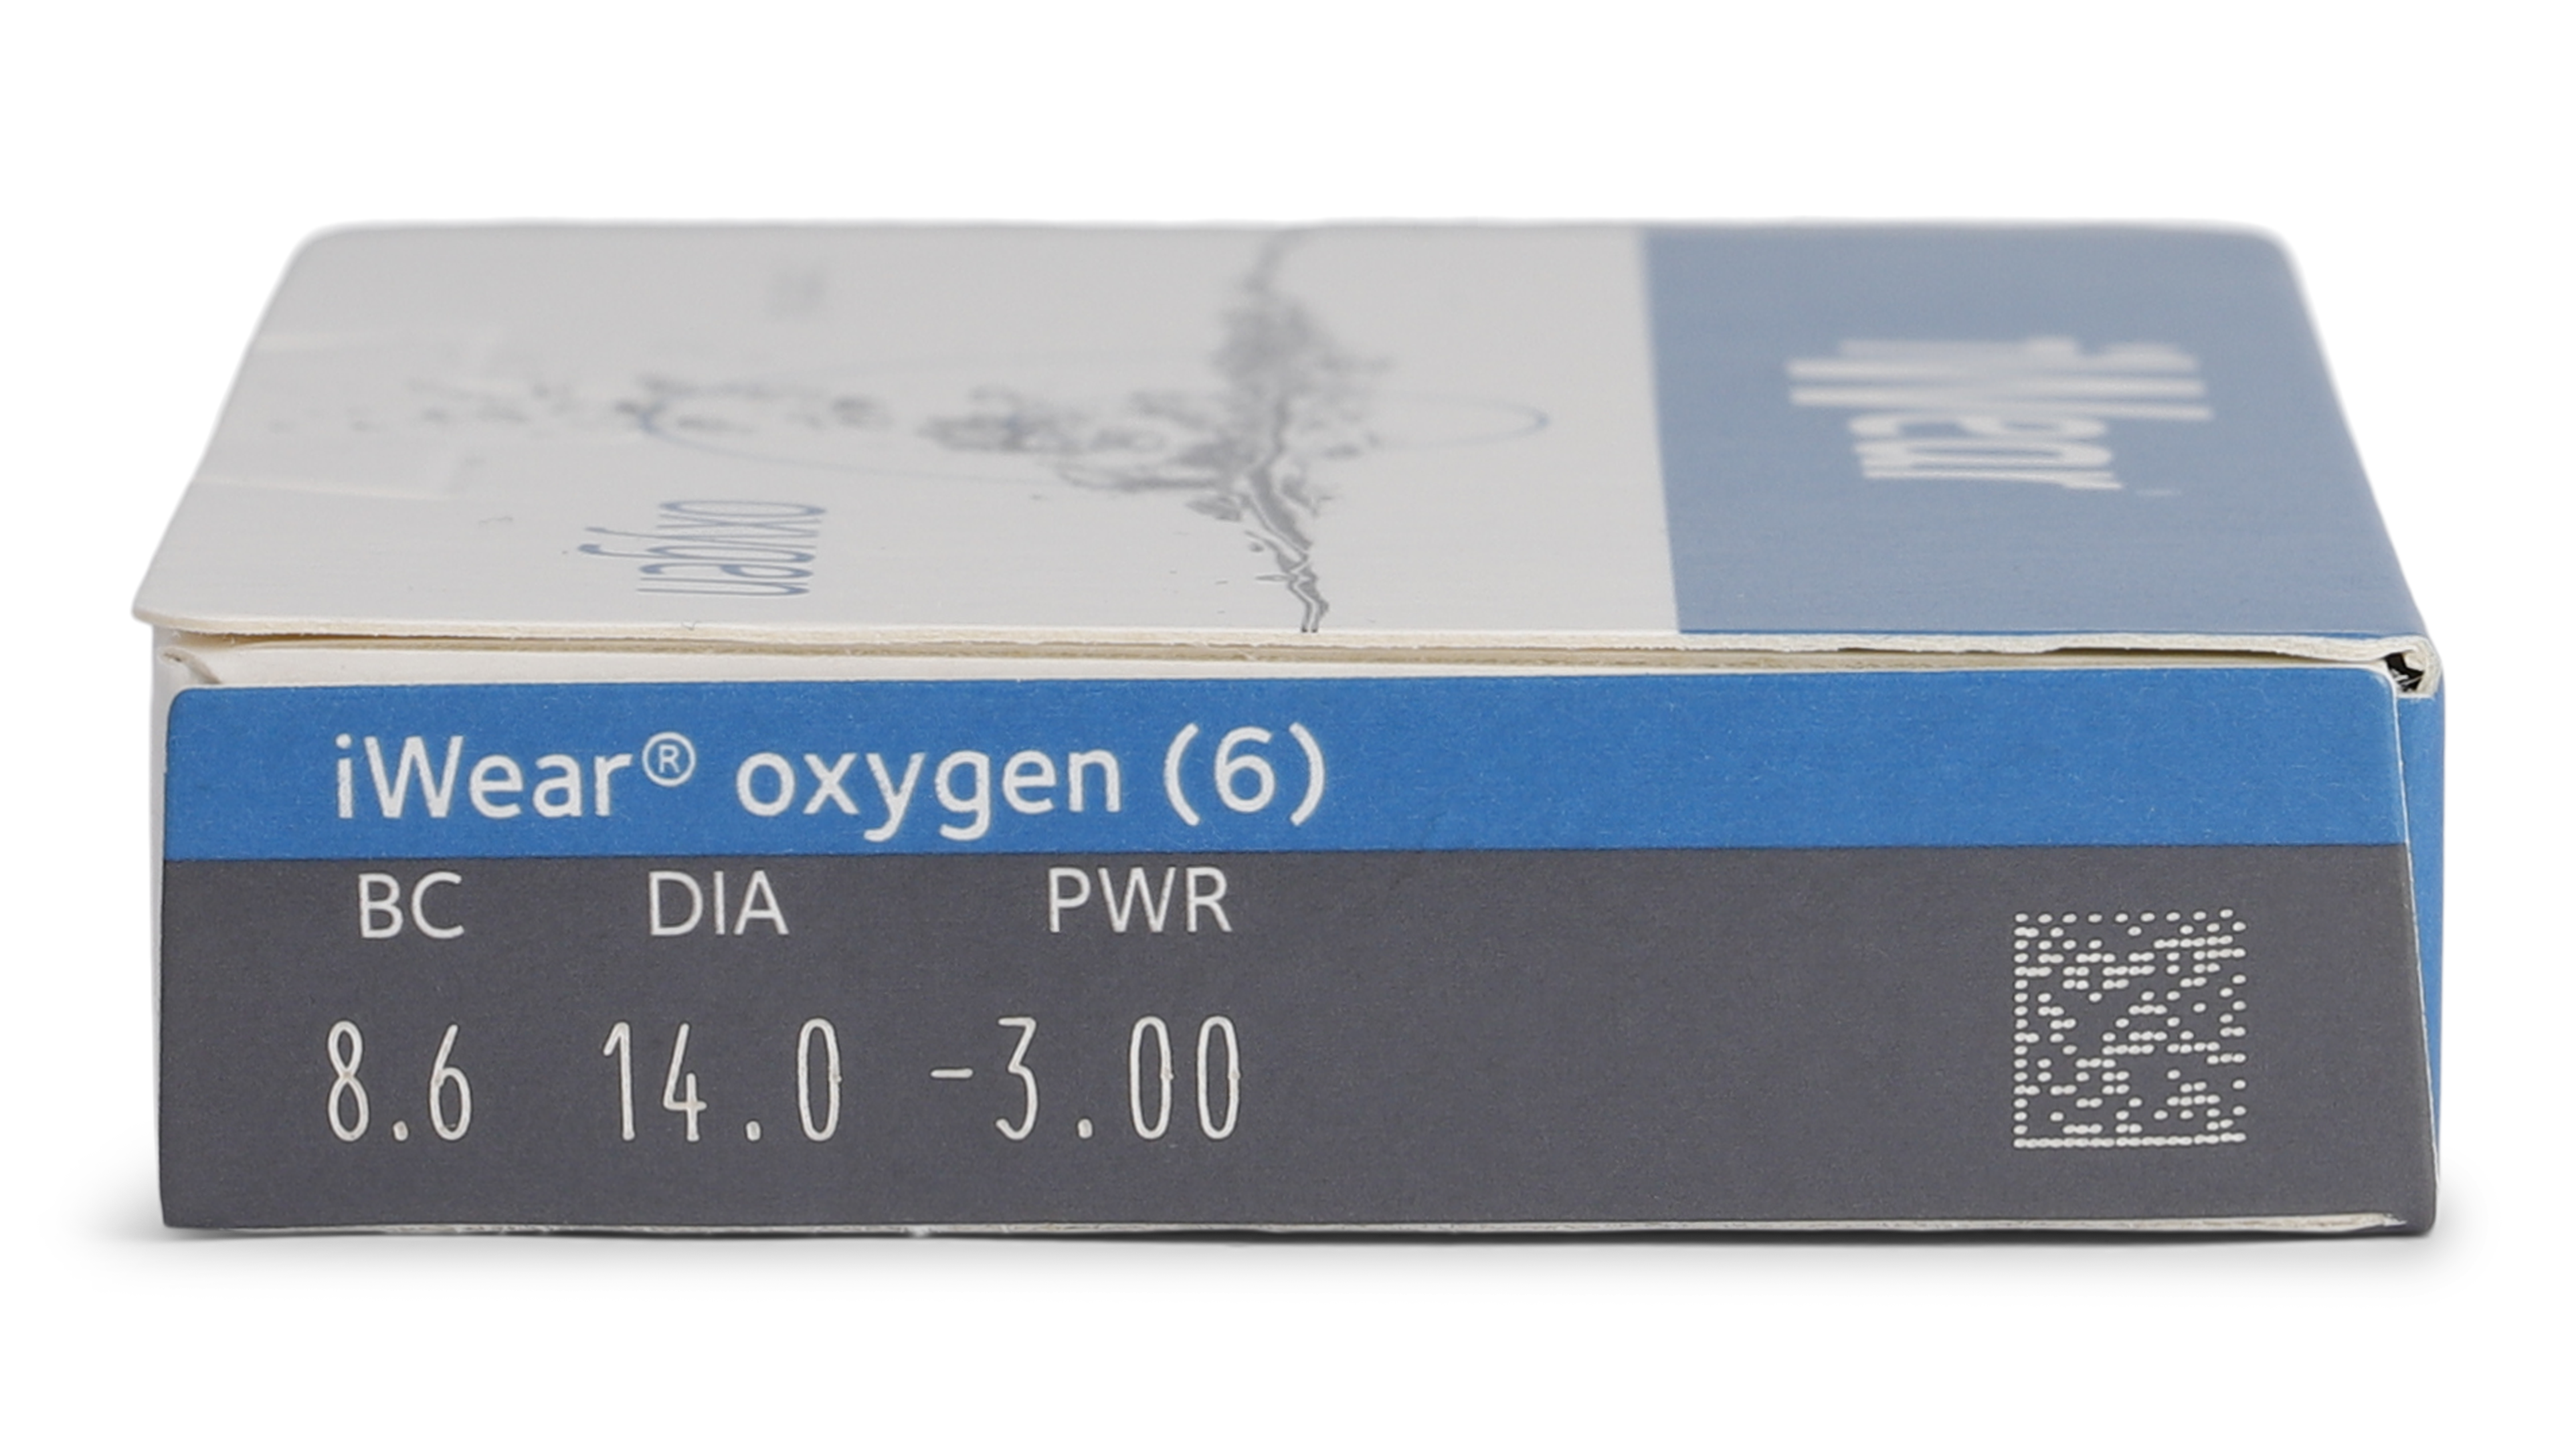 Parameter iWear oxygen